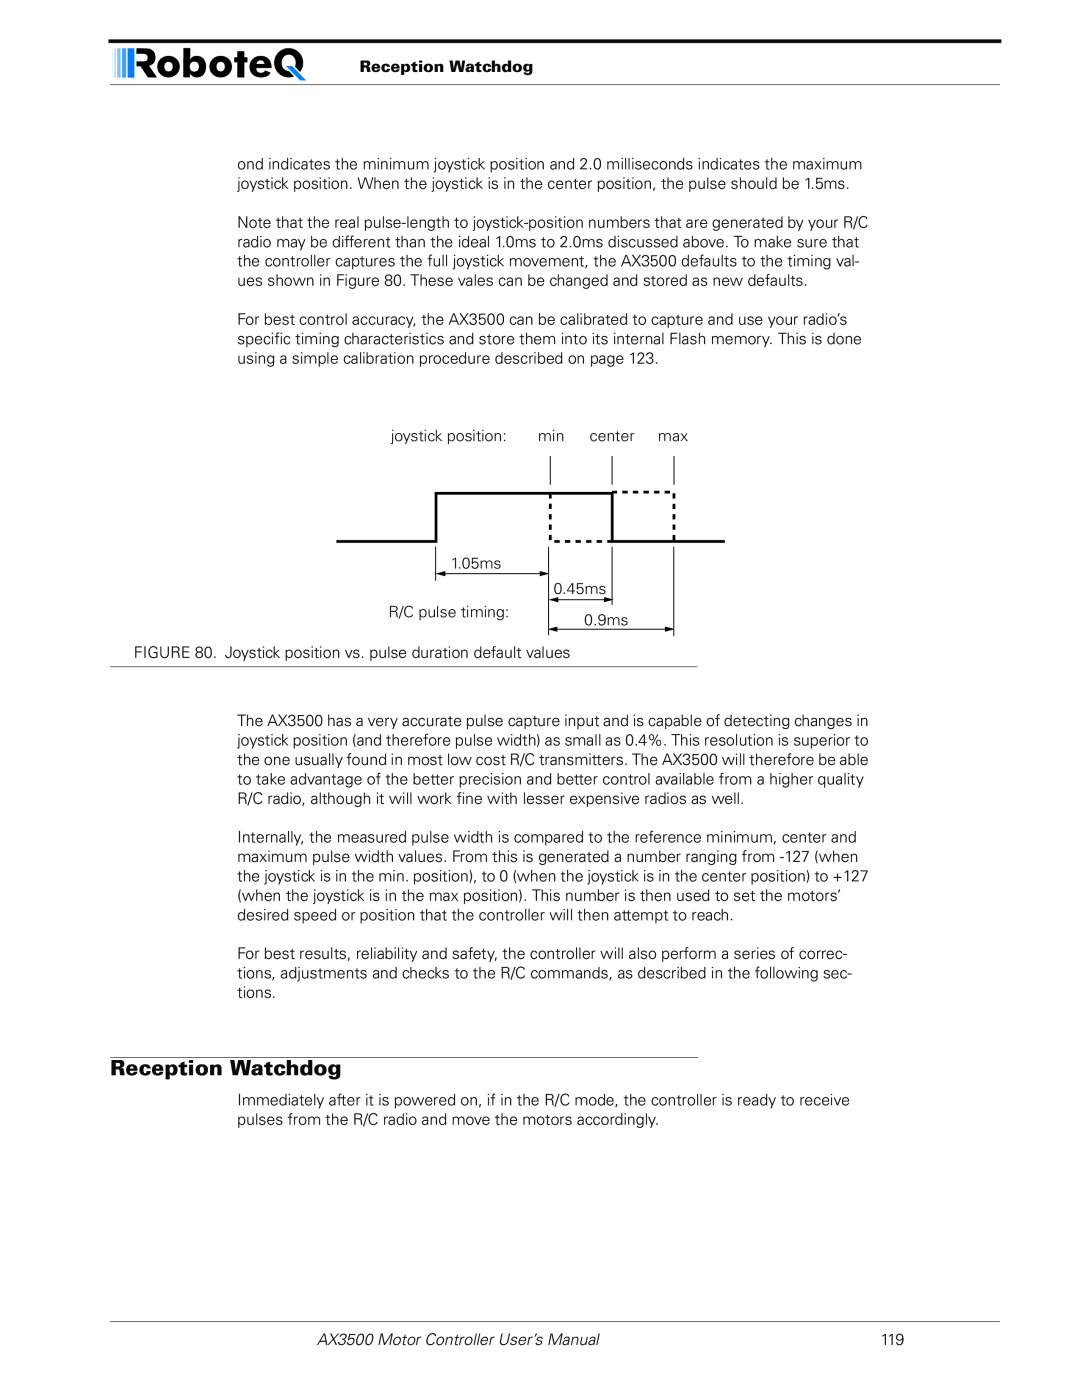 RoboteQ user manual Reception Watchdog, AX3500 Motor Controller User’s Manual 